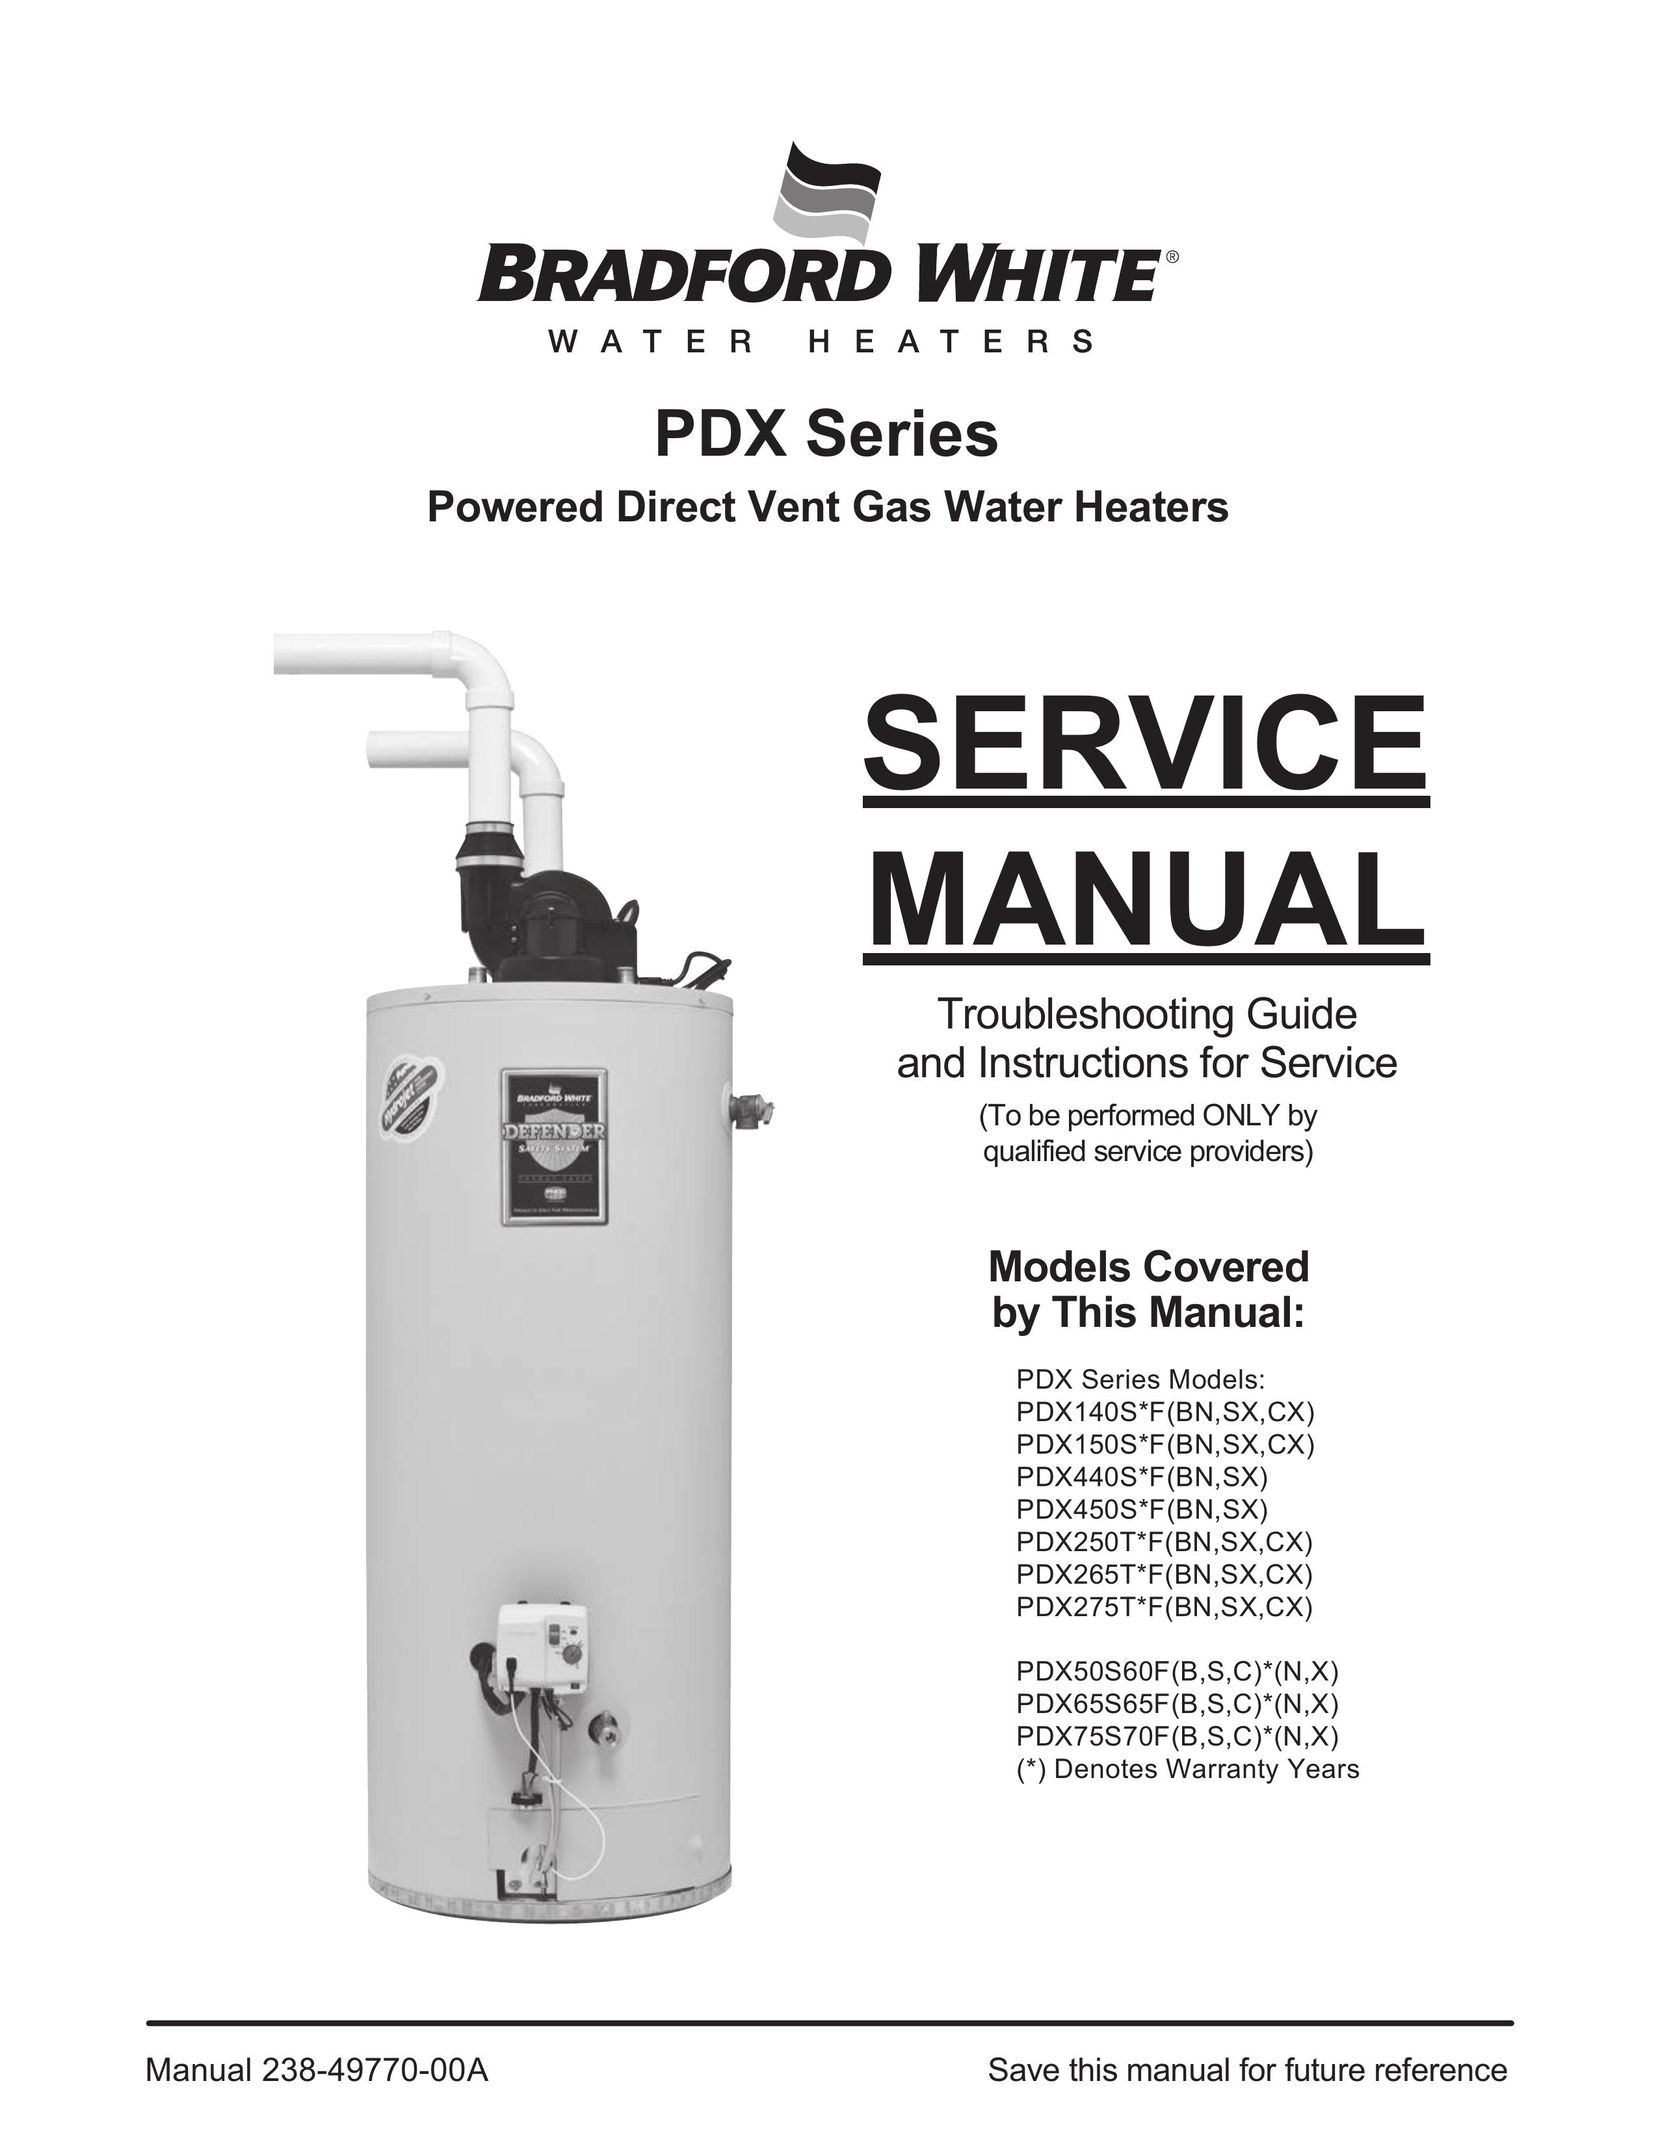 Honeywell PDX150S*F(BN,SX,CX) Water Heater User Manual